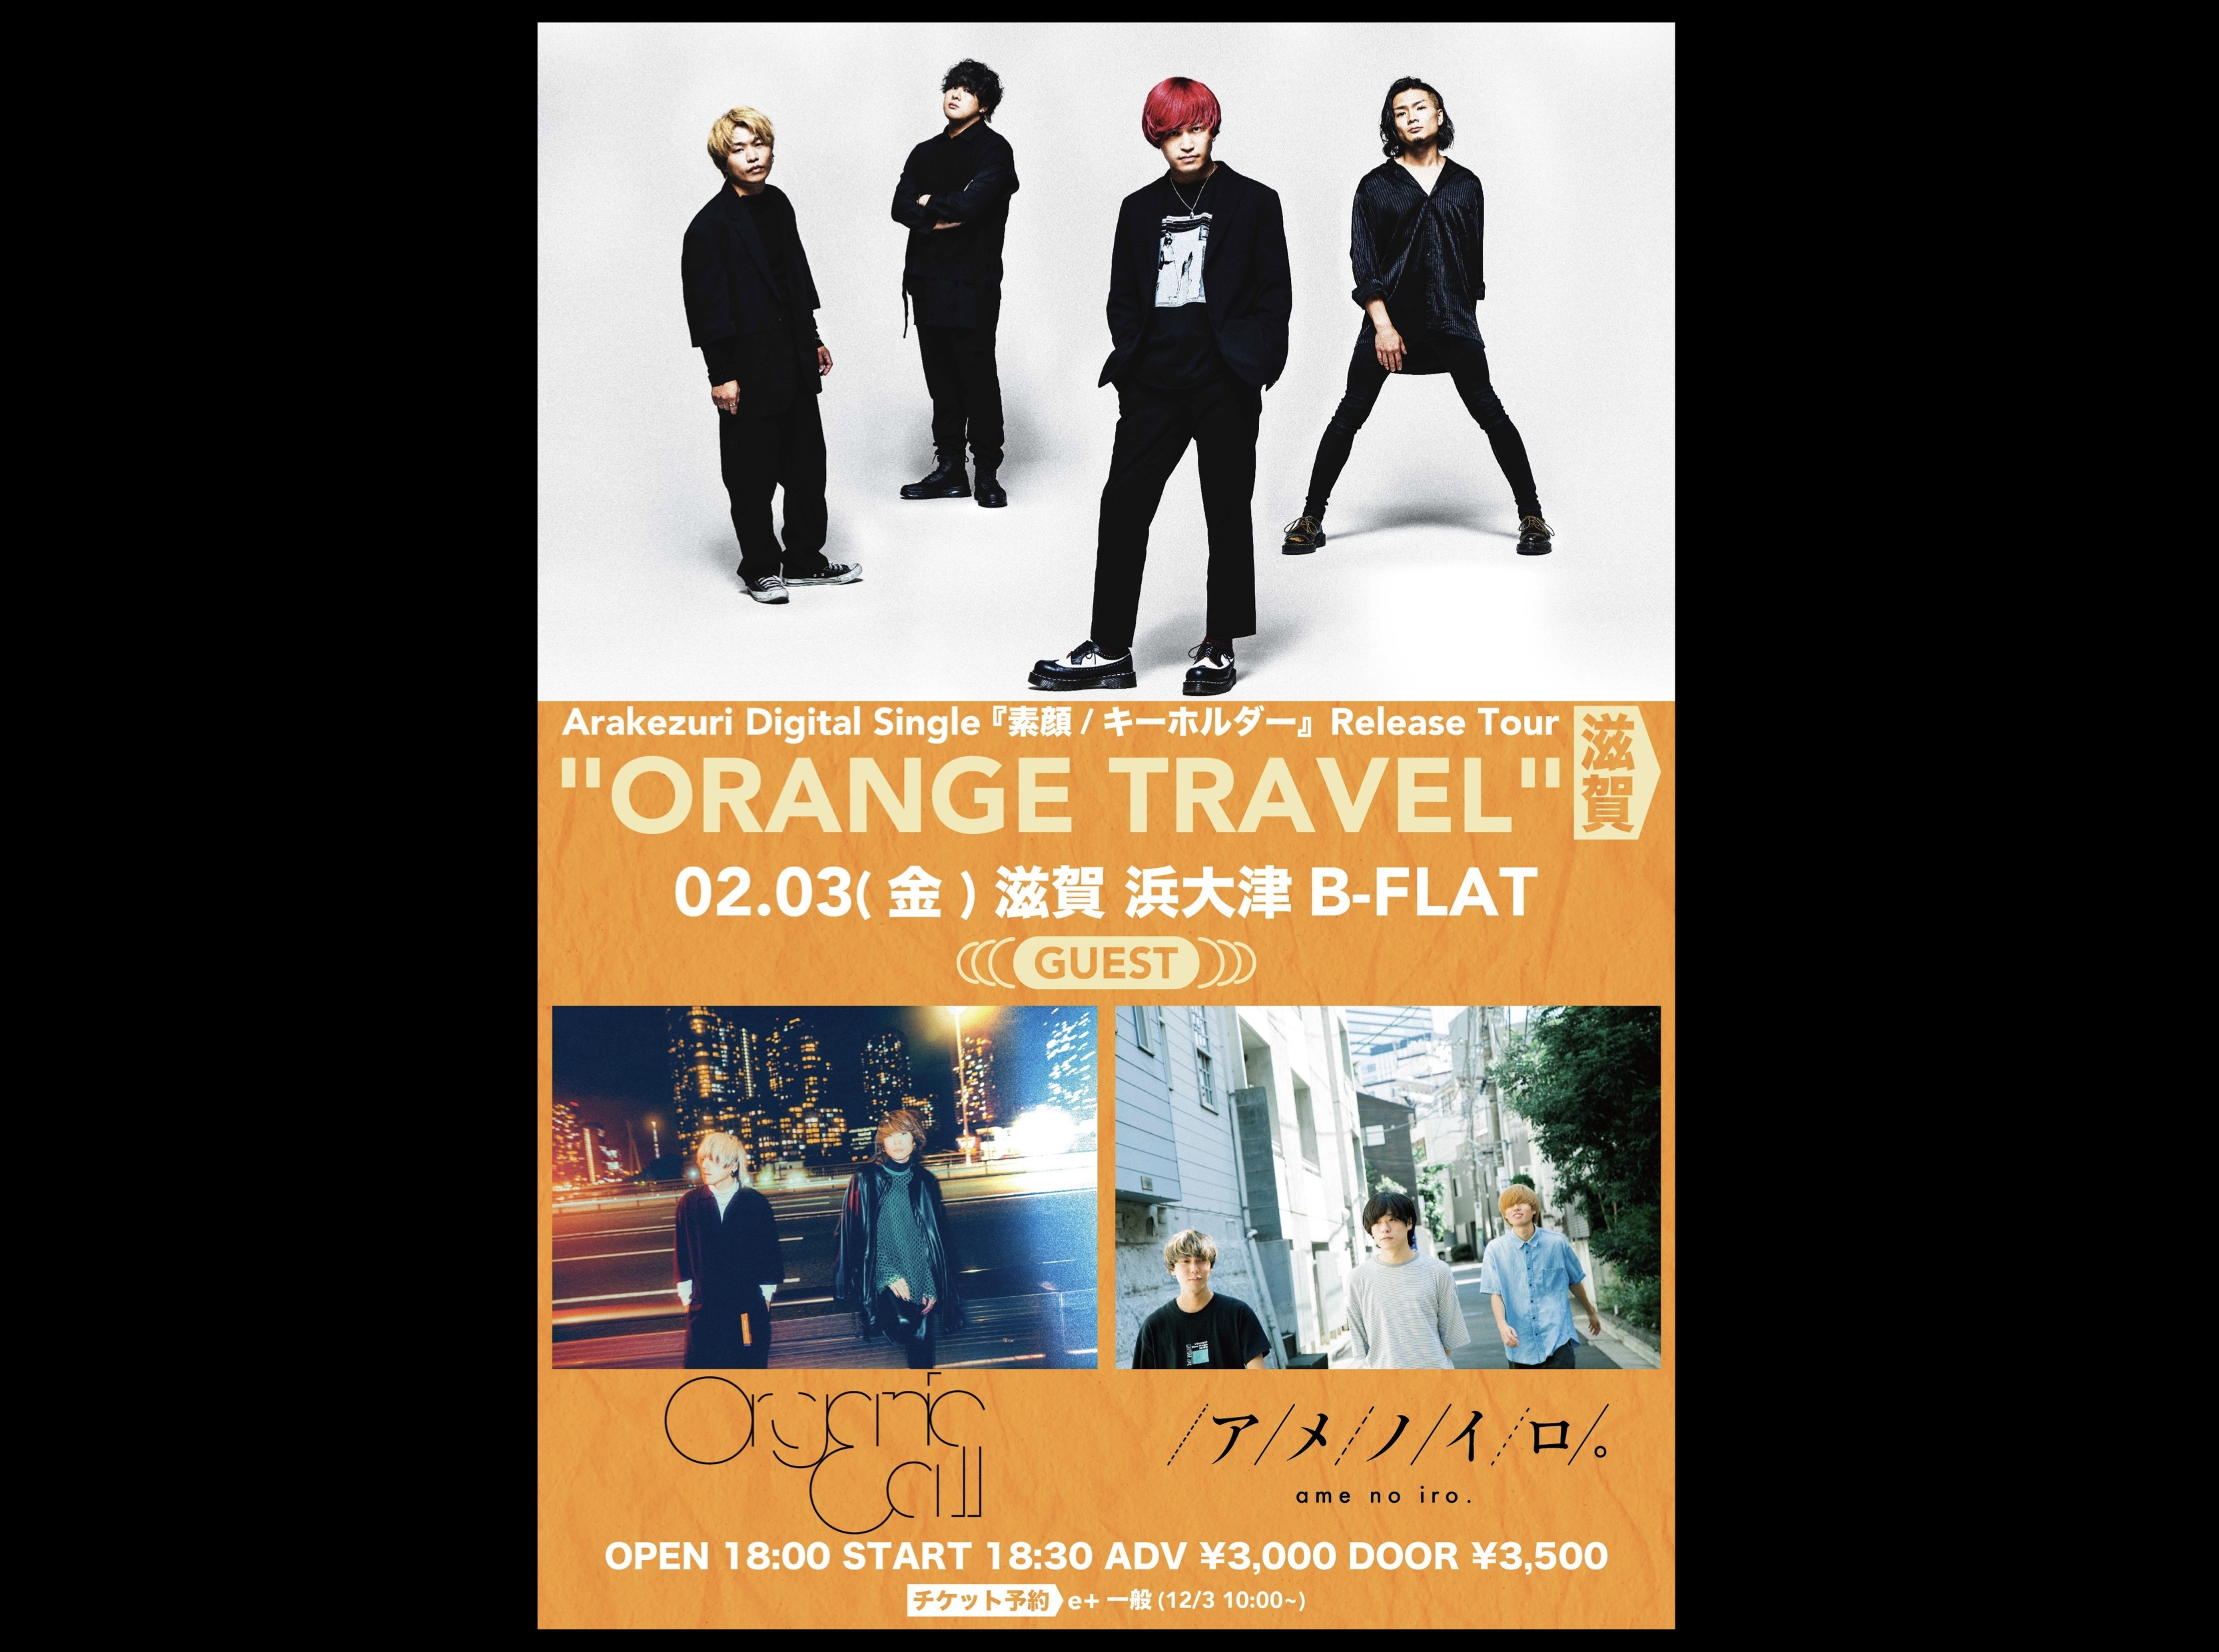 Arakezuri Digital Single『素顔/キーホルダー』Release Tour “ORANGE TRAVEL”FINAL